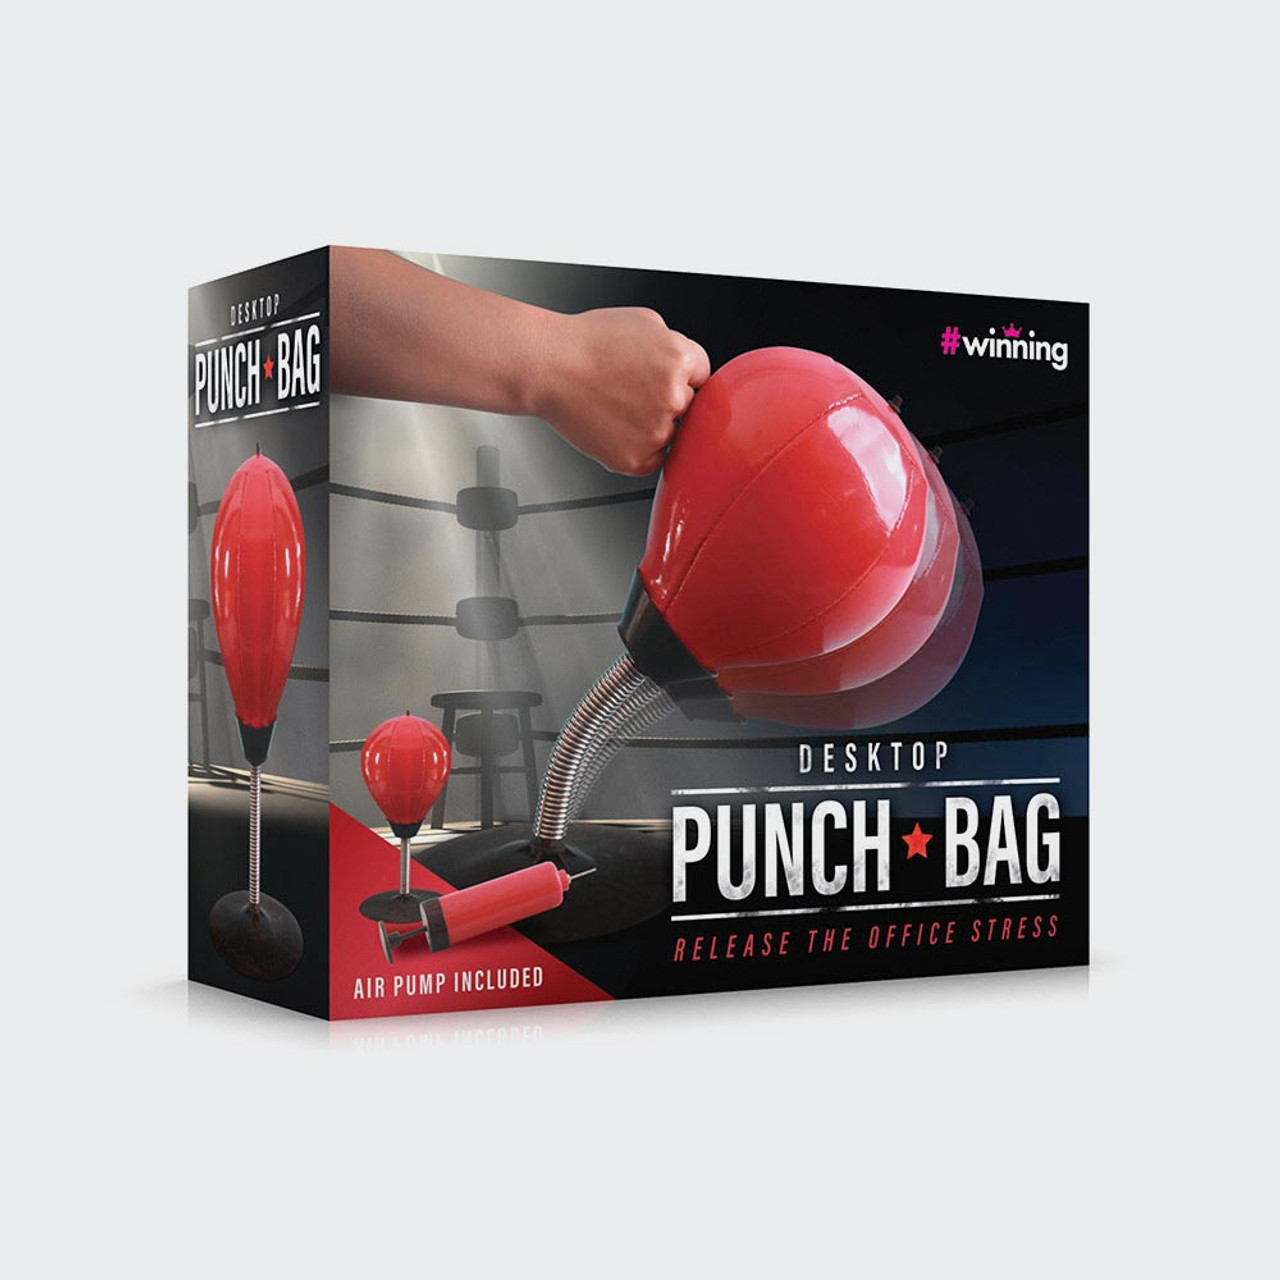 OhhGo Desktop Punch Bag Free Standing Boxing Bag Stress Relief Toys for Kids Boys Men Adult Office Worker 